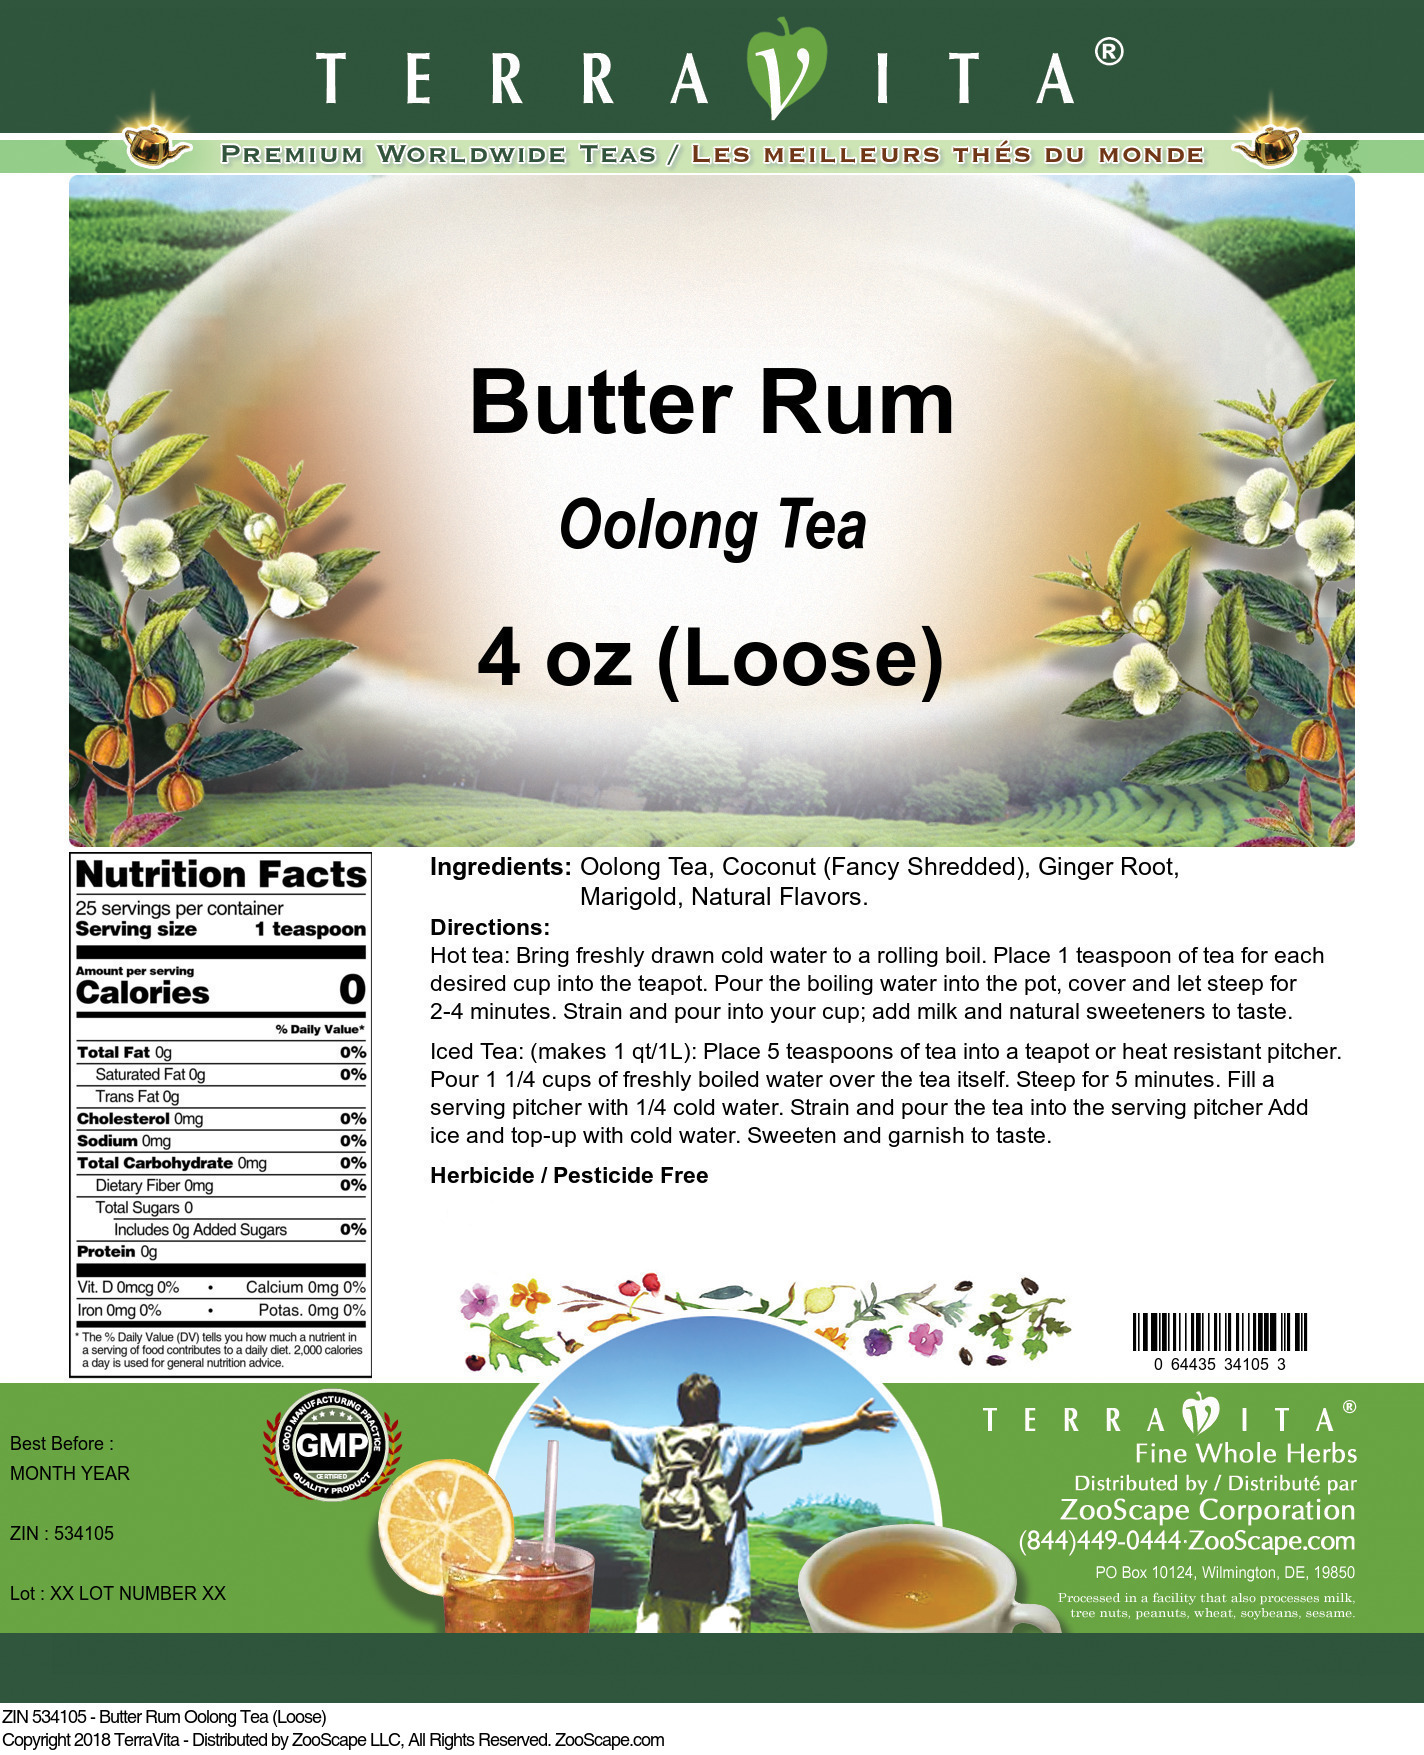 Butter Rum Oolong Tea (Loose) - Label